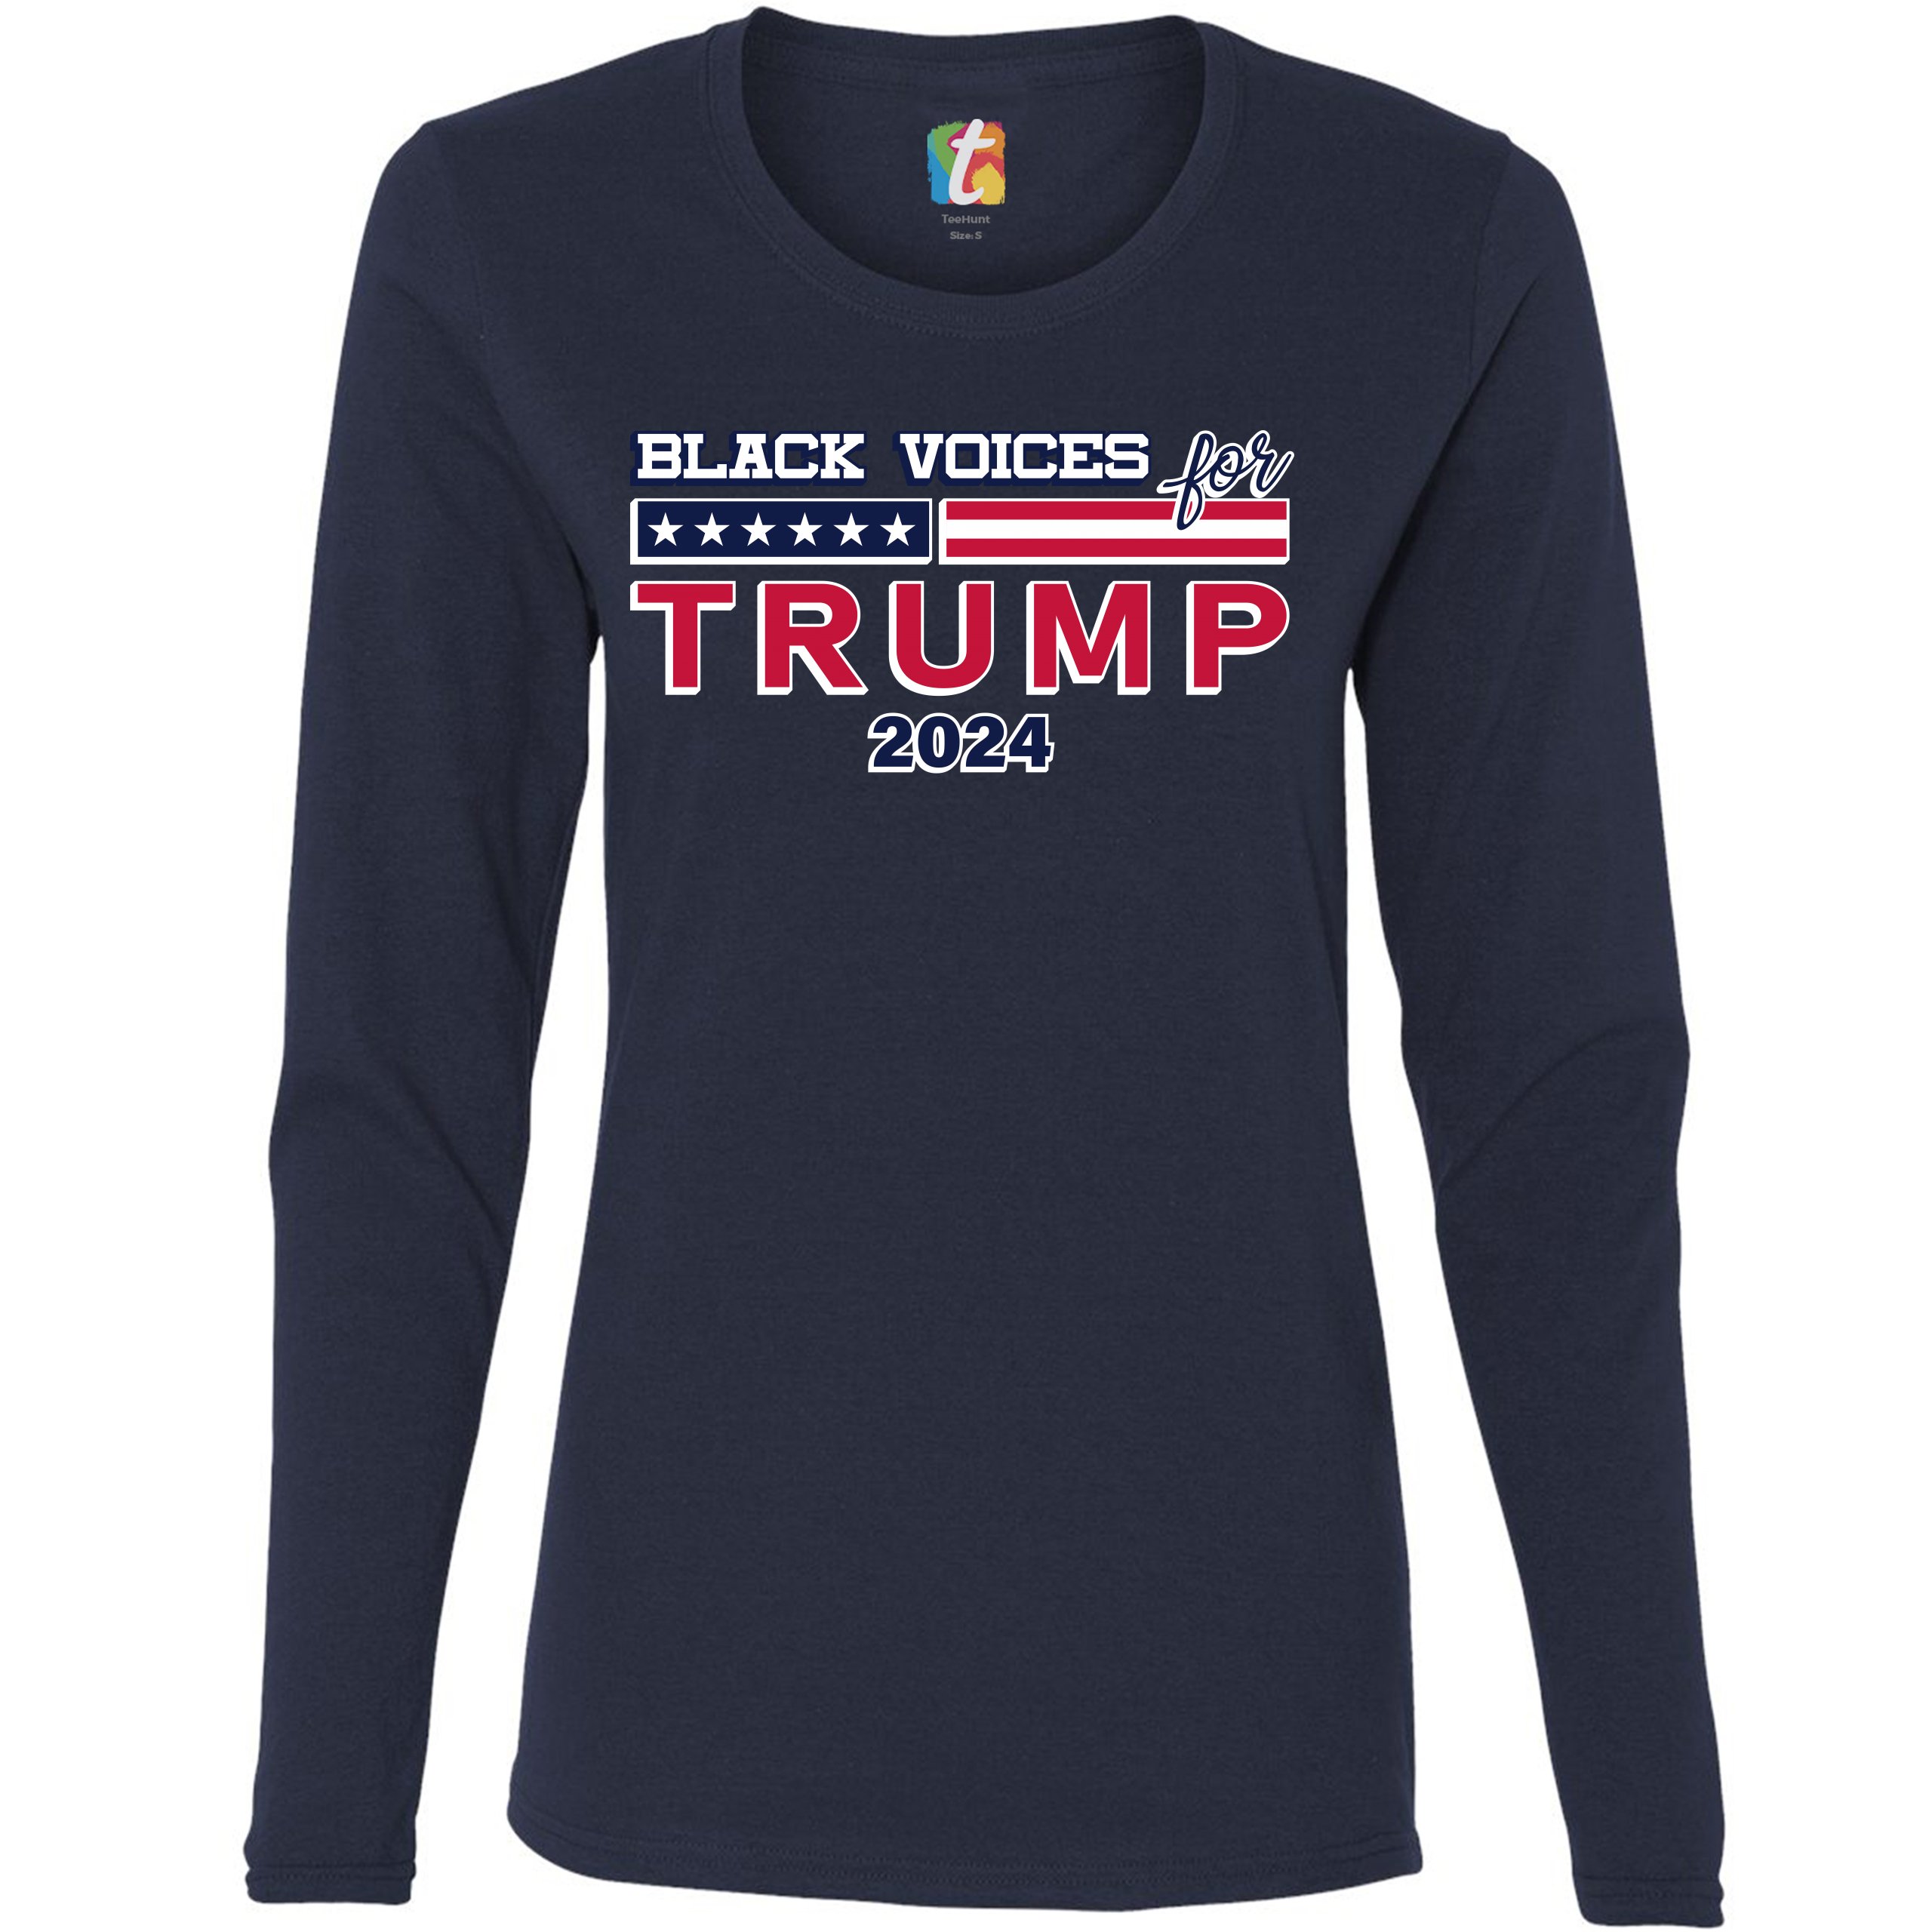 Black Voices For Trump Women's Long Sleeve Tshirt Donald Trump 2024